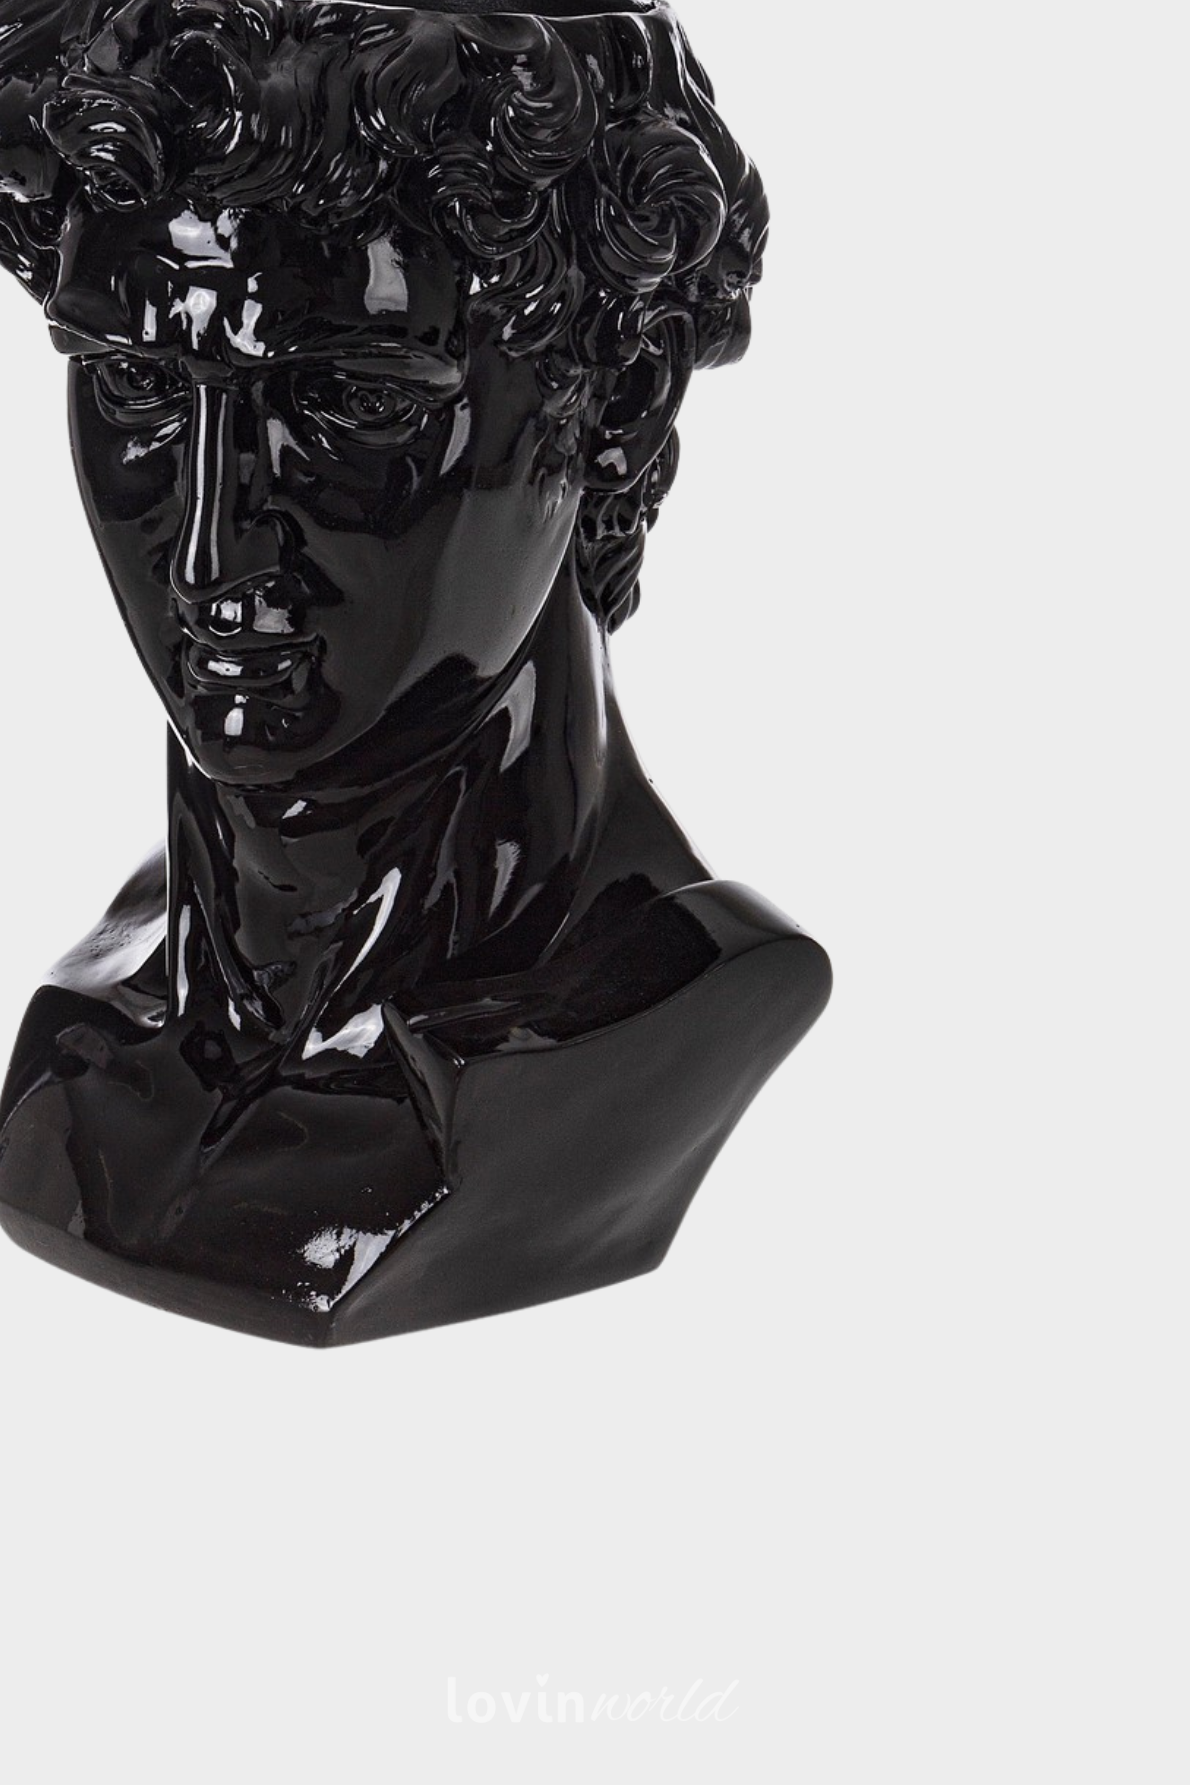 Busto decorativo Olympus in colore nero 40 cm.-3